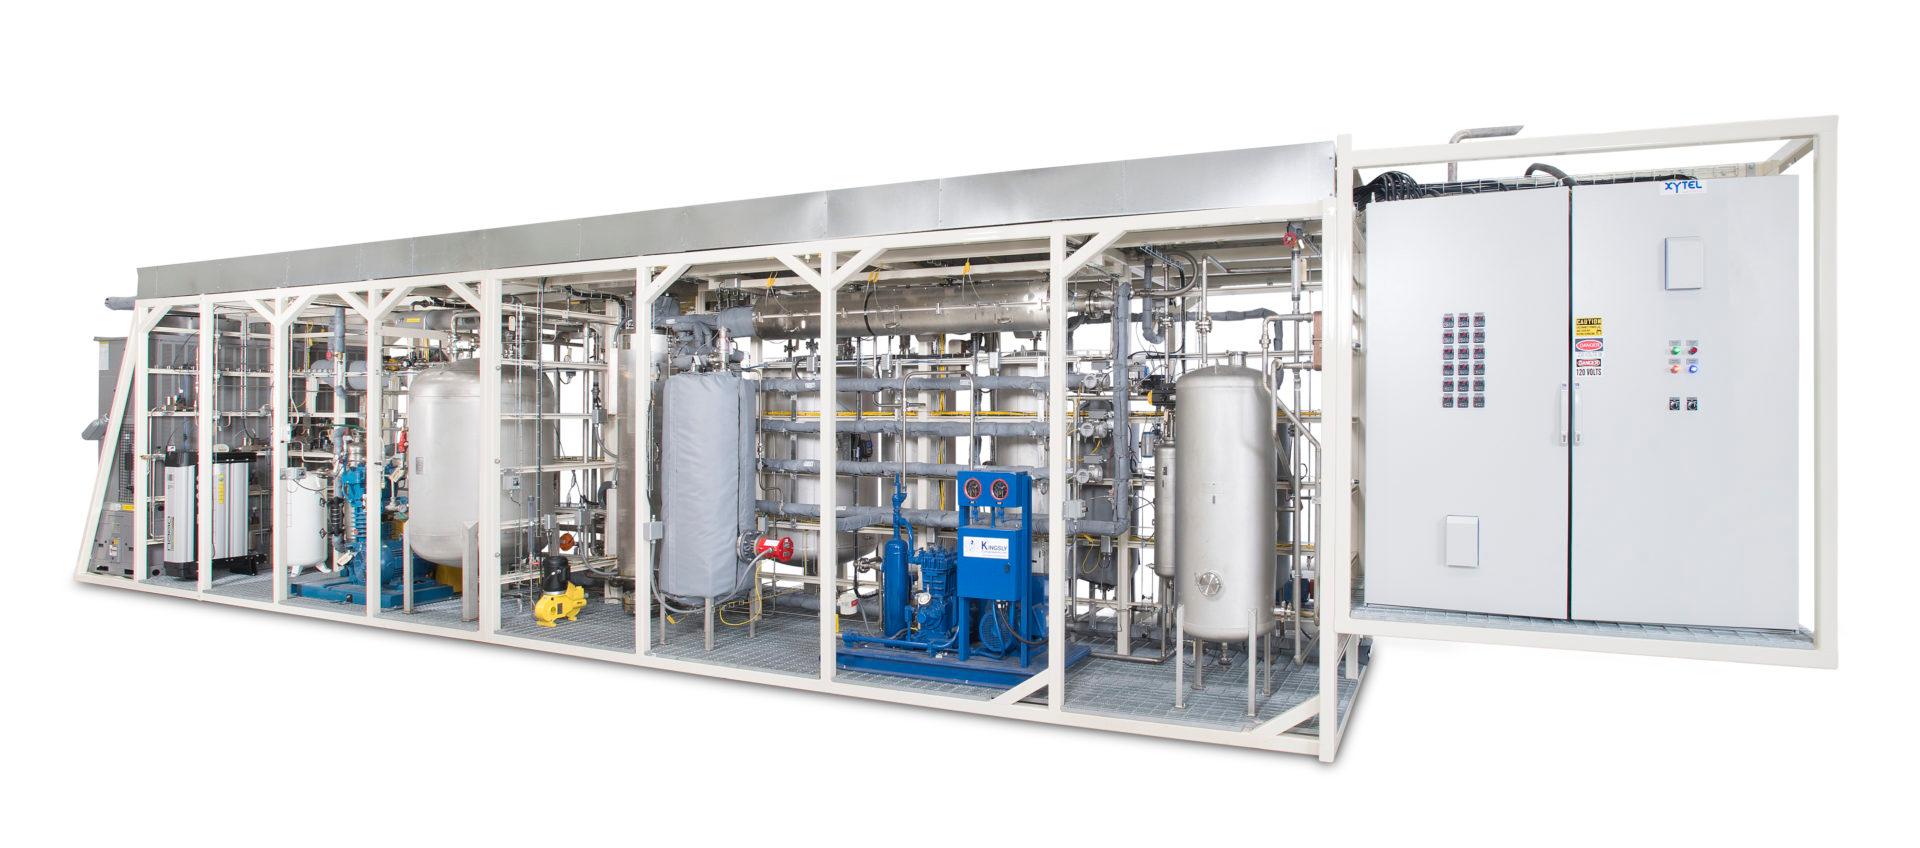 Product Steam Methane Reforming - XYTEL Corporation image